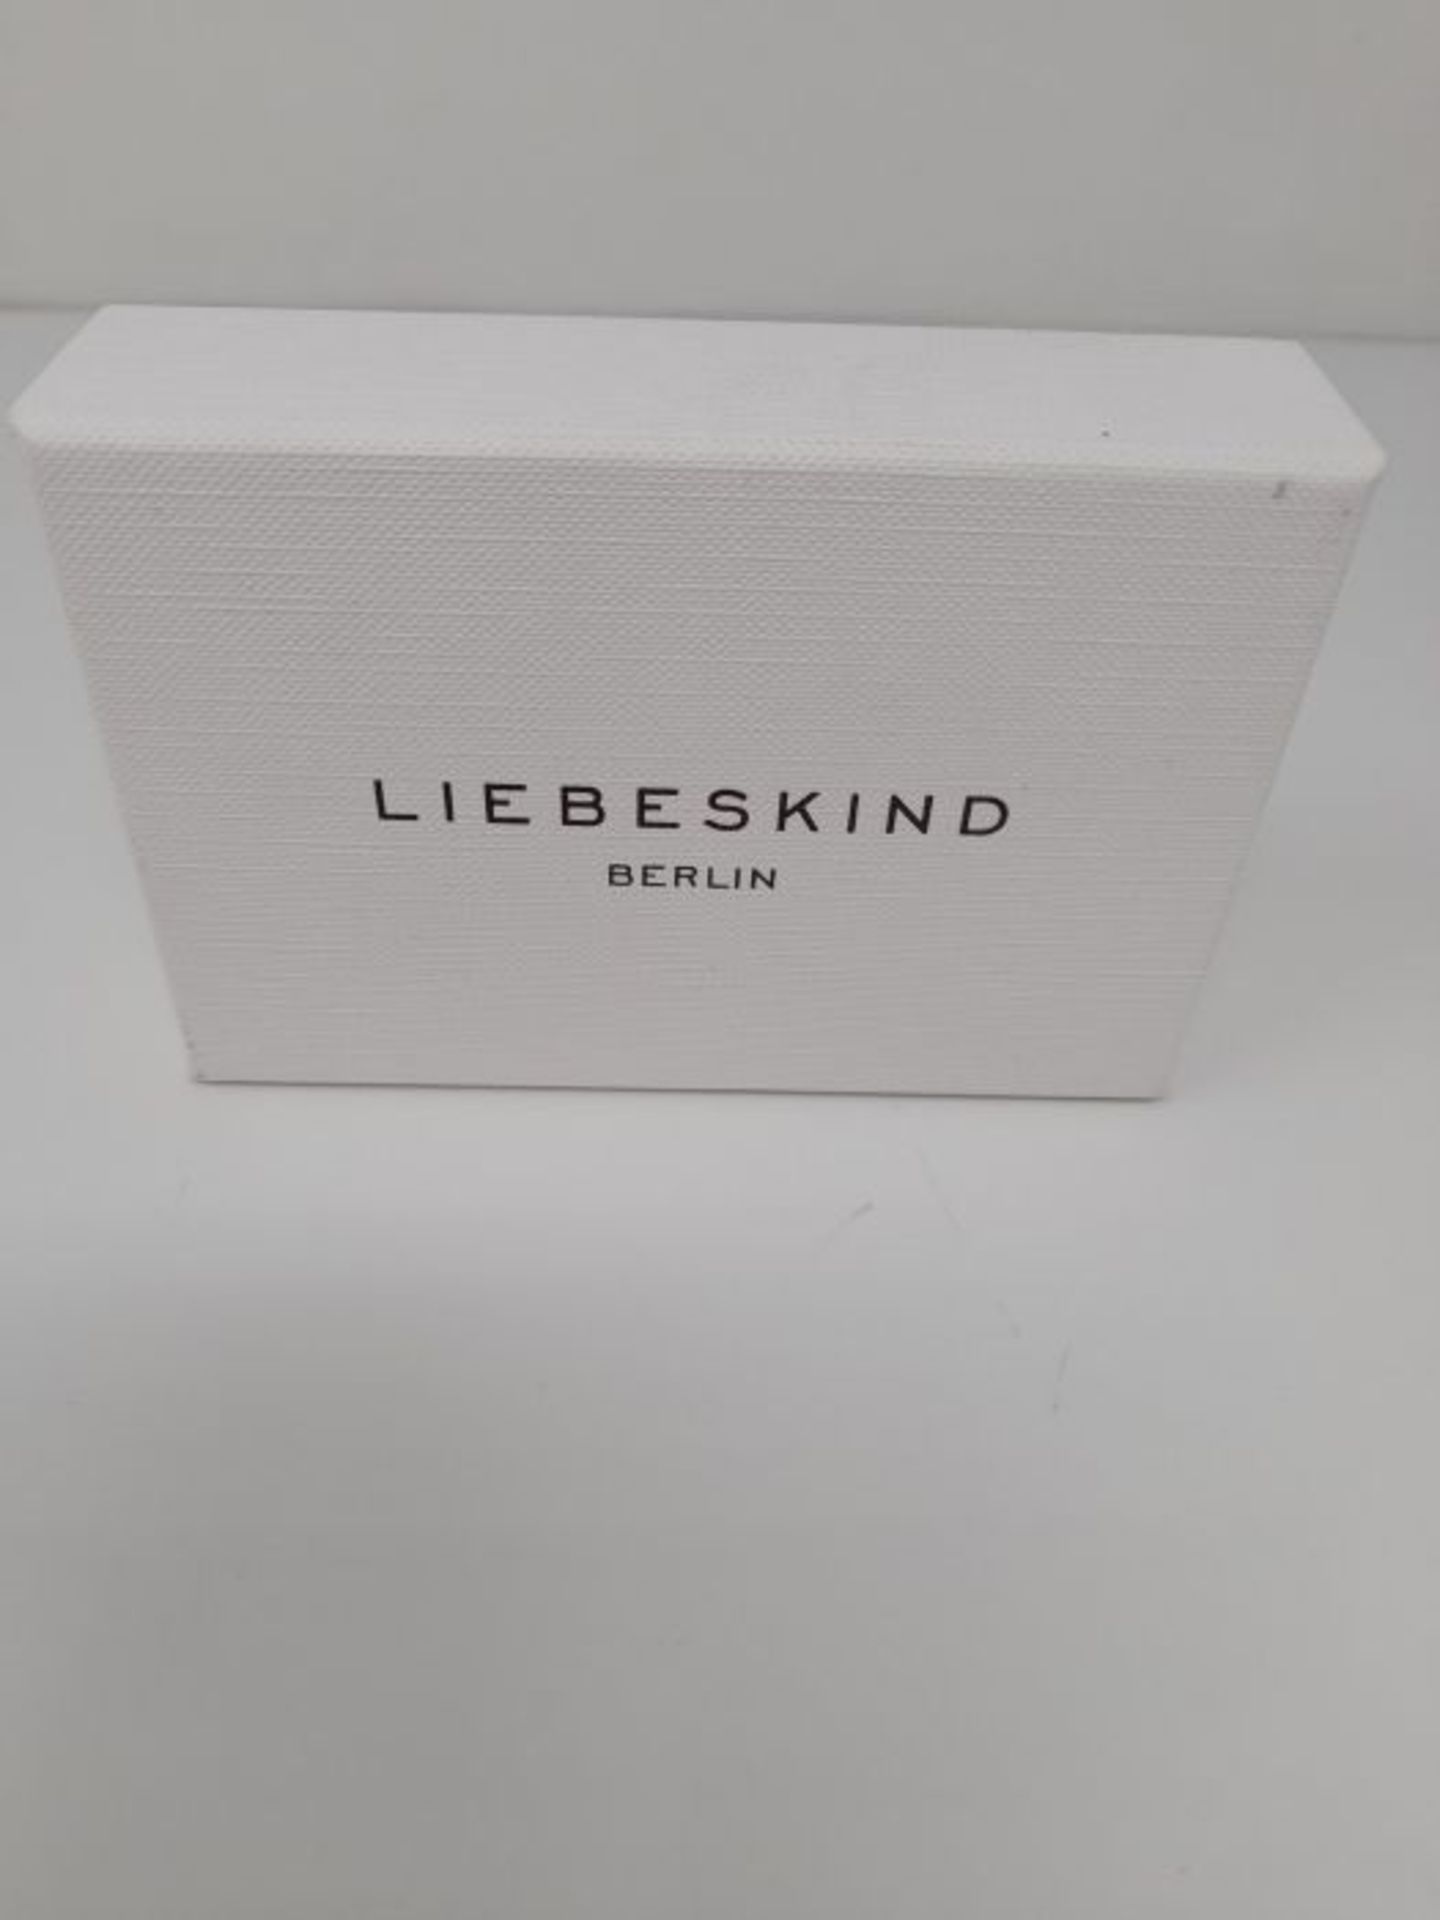 [CRACKED] Liebeskind Berlin Kette aus Edelstahl in Roségold LJ-0505-N-45 - Image 2 of 3